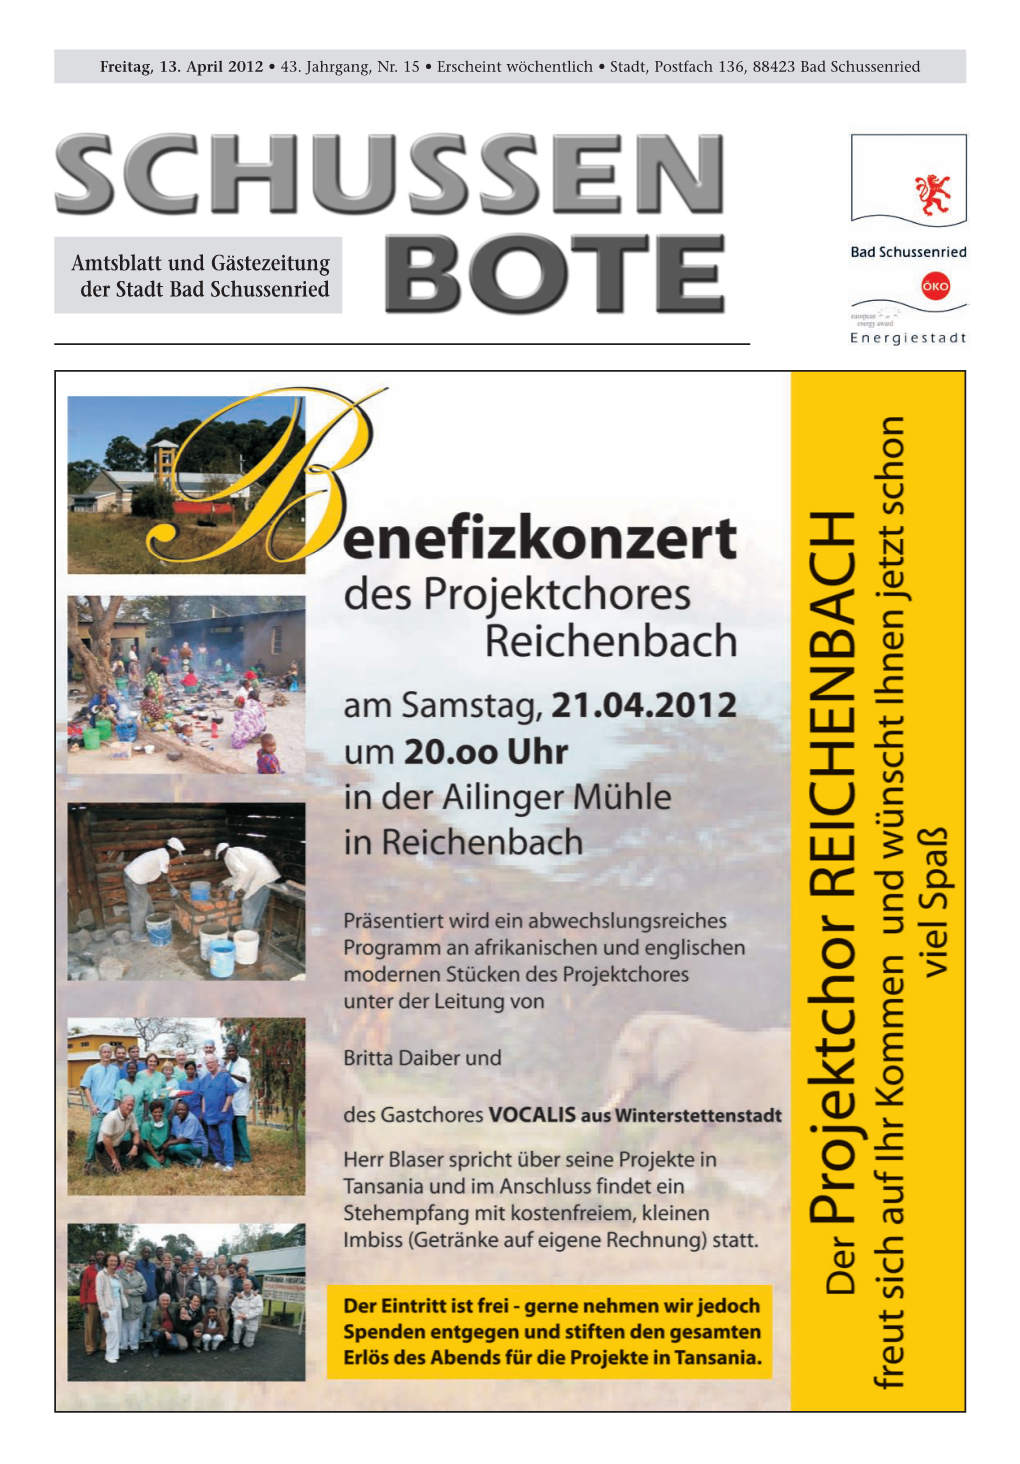 Amtsblatt Und Gästezeitung Der Stadt Bad Schussenried Wegebaugerätegemeinschaft Albrand Tagesordnung: 7